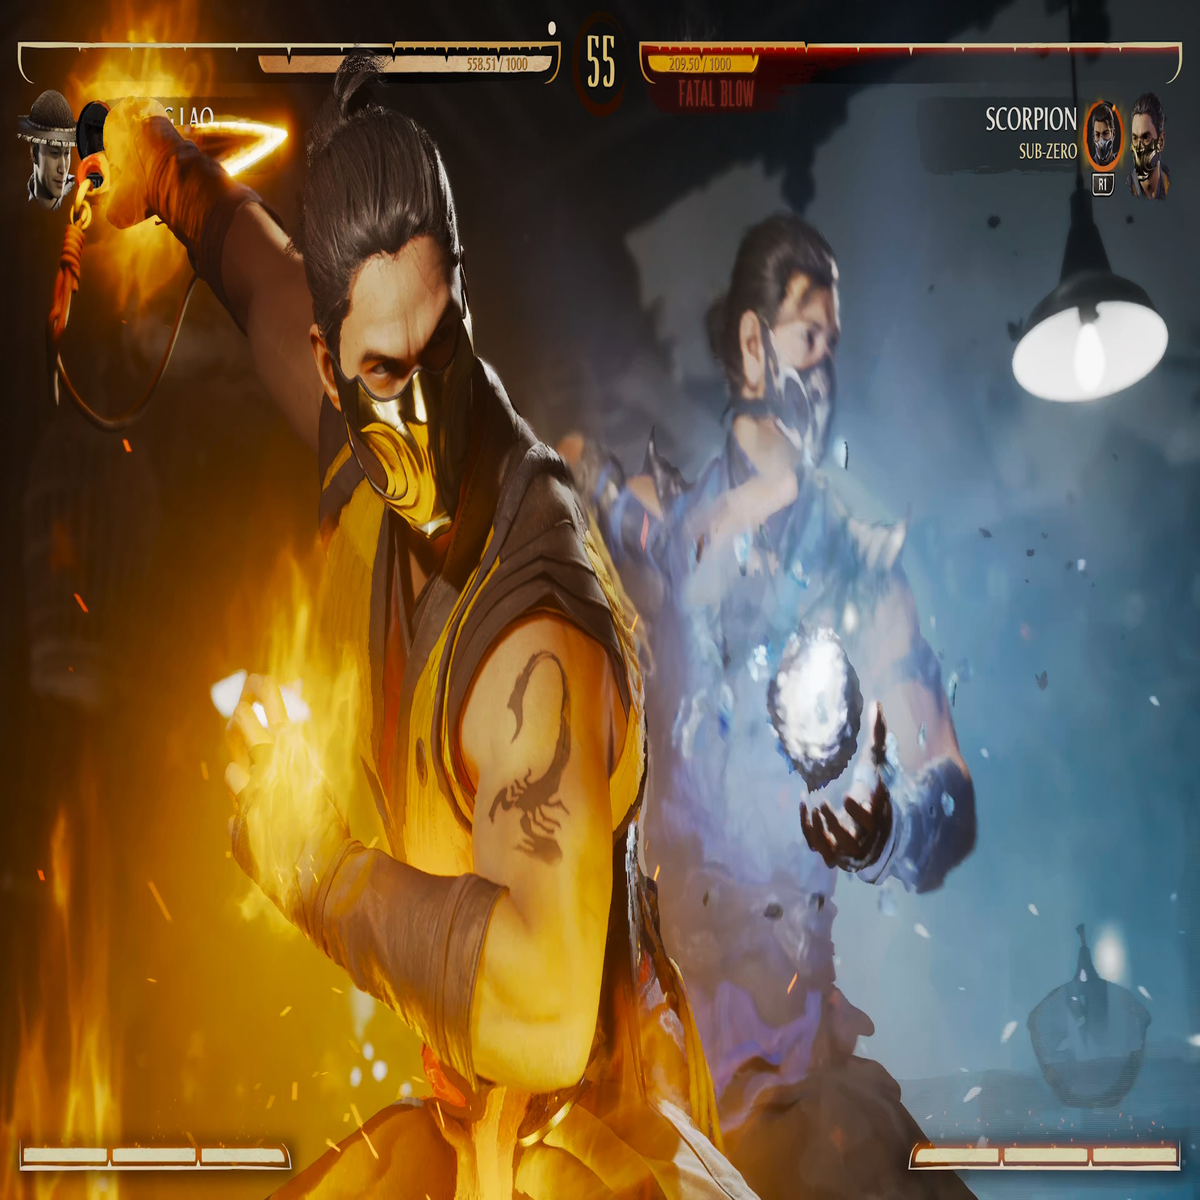 All Mortal Kombat 1 Fatalities on Video: Sub-Zero, Scorpion